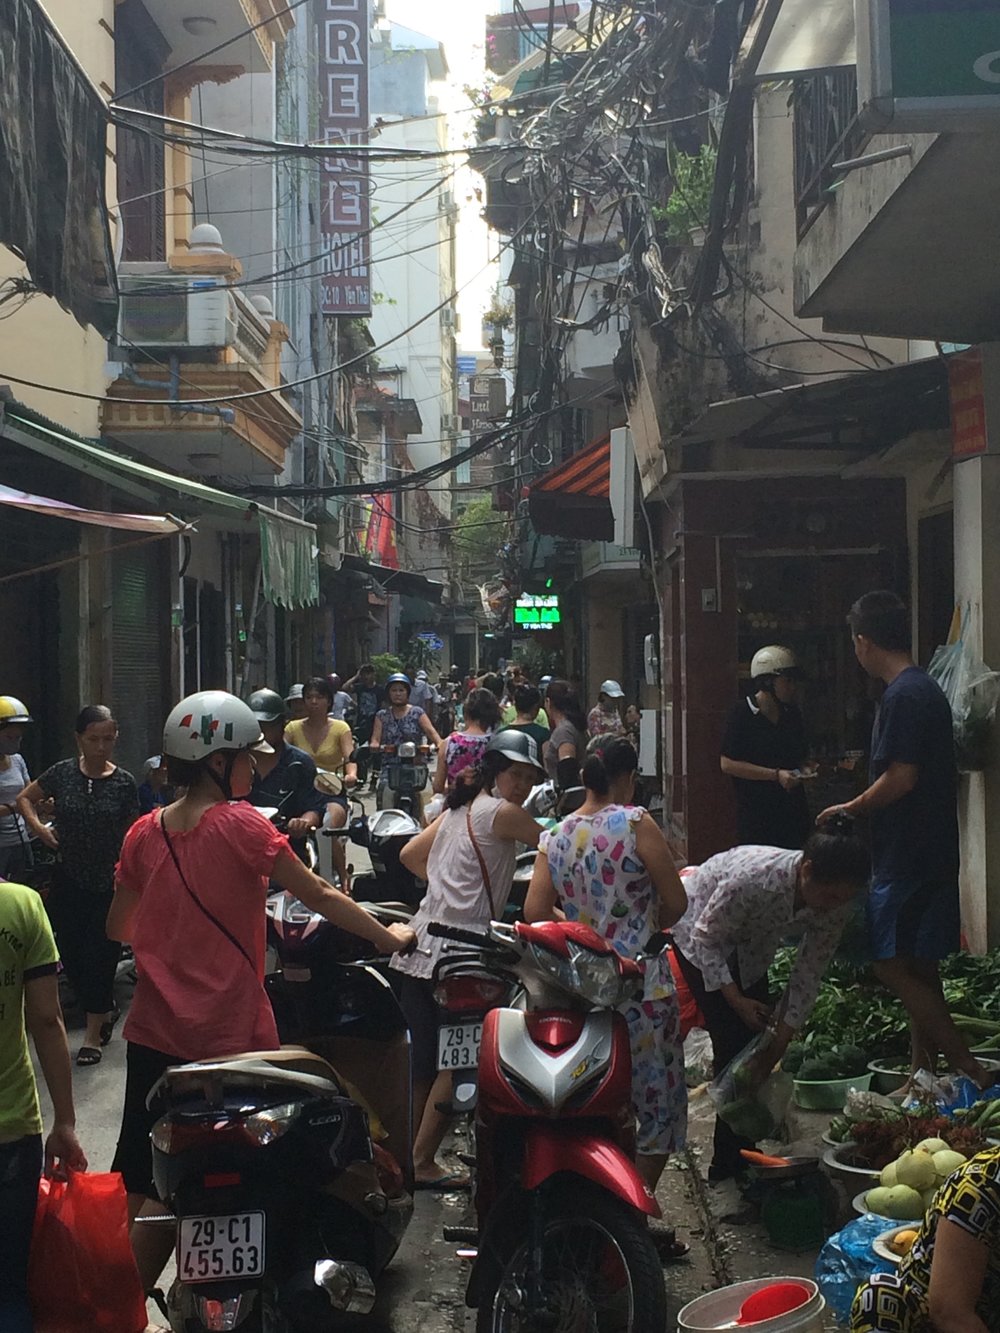 Market alley in Hanoi